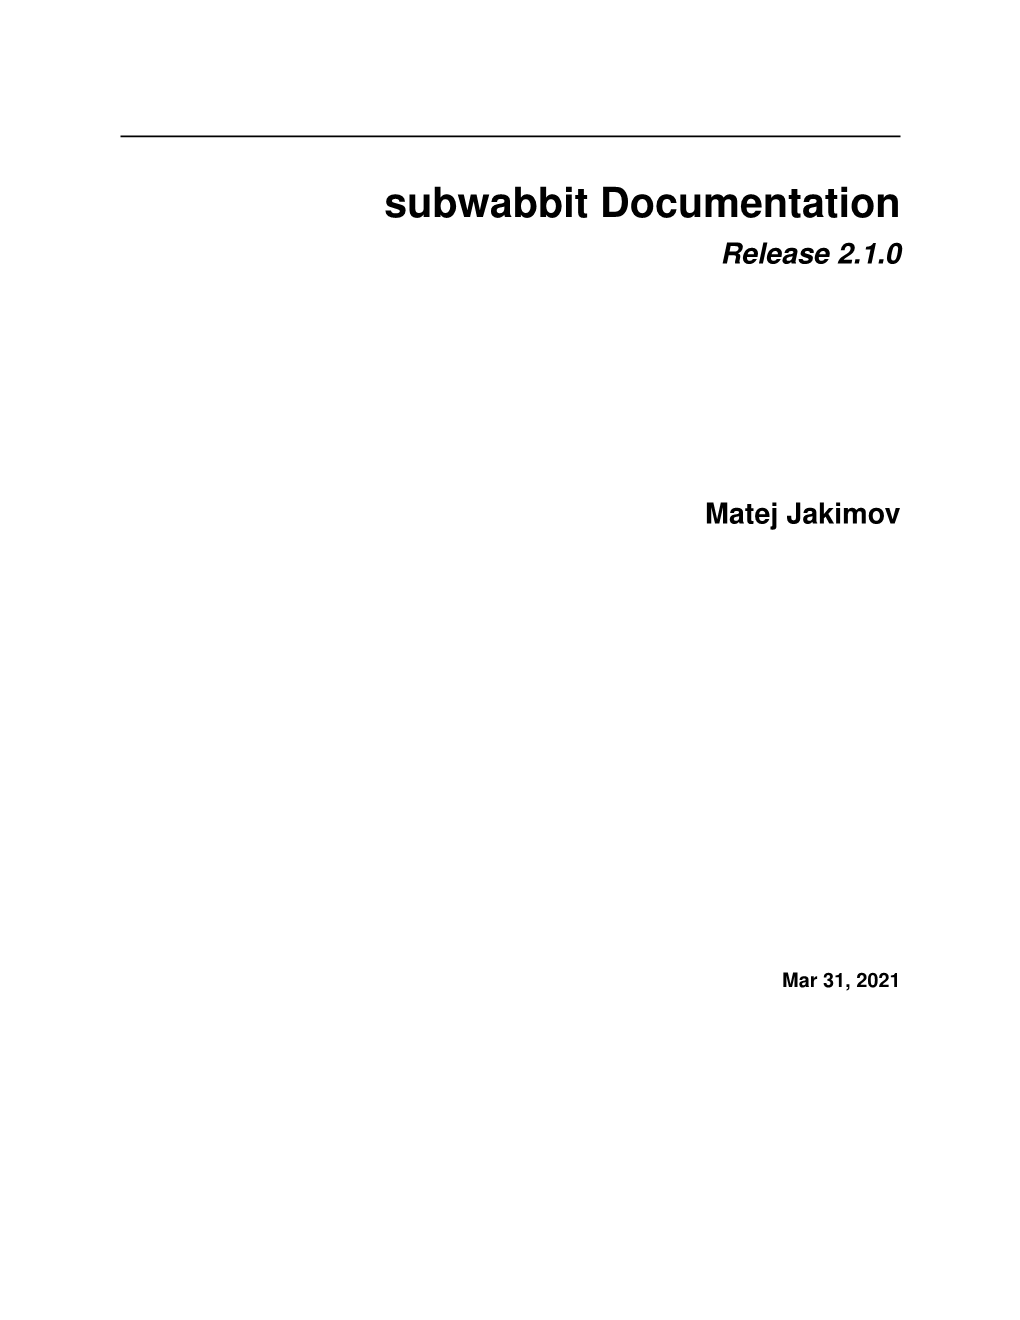 Subwabbit Documentation Release 2.1.0